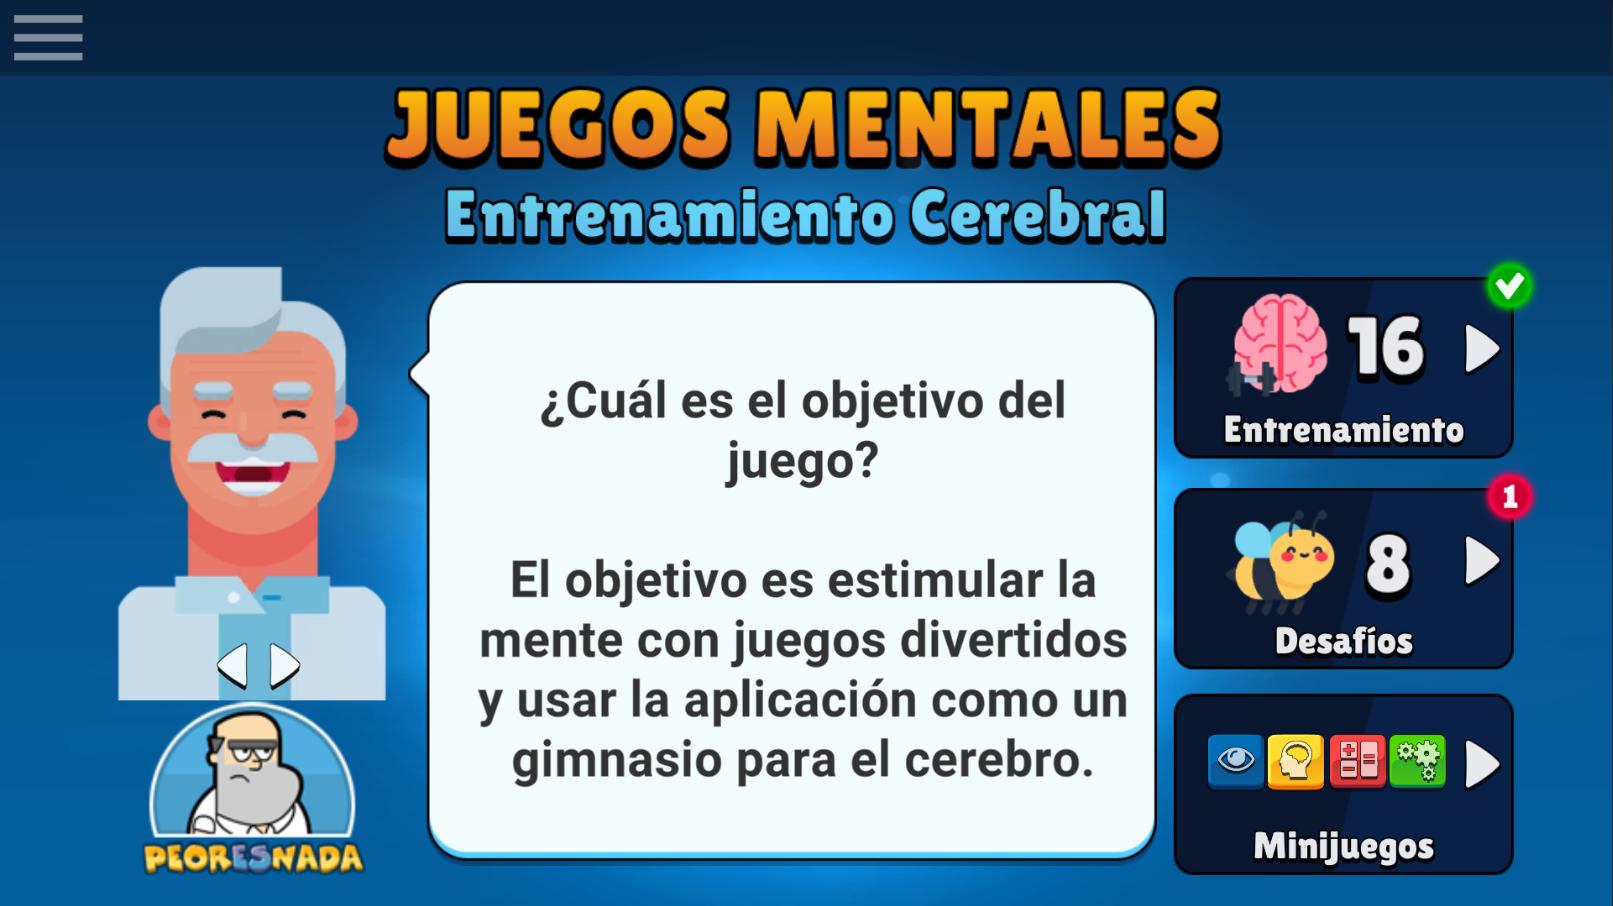 Neurobics 60 Juegos Mentales For Android Apk Download